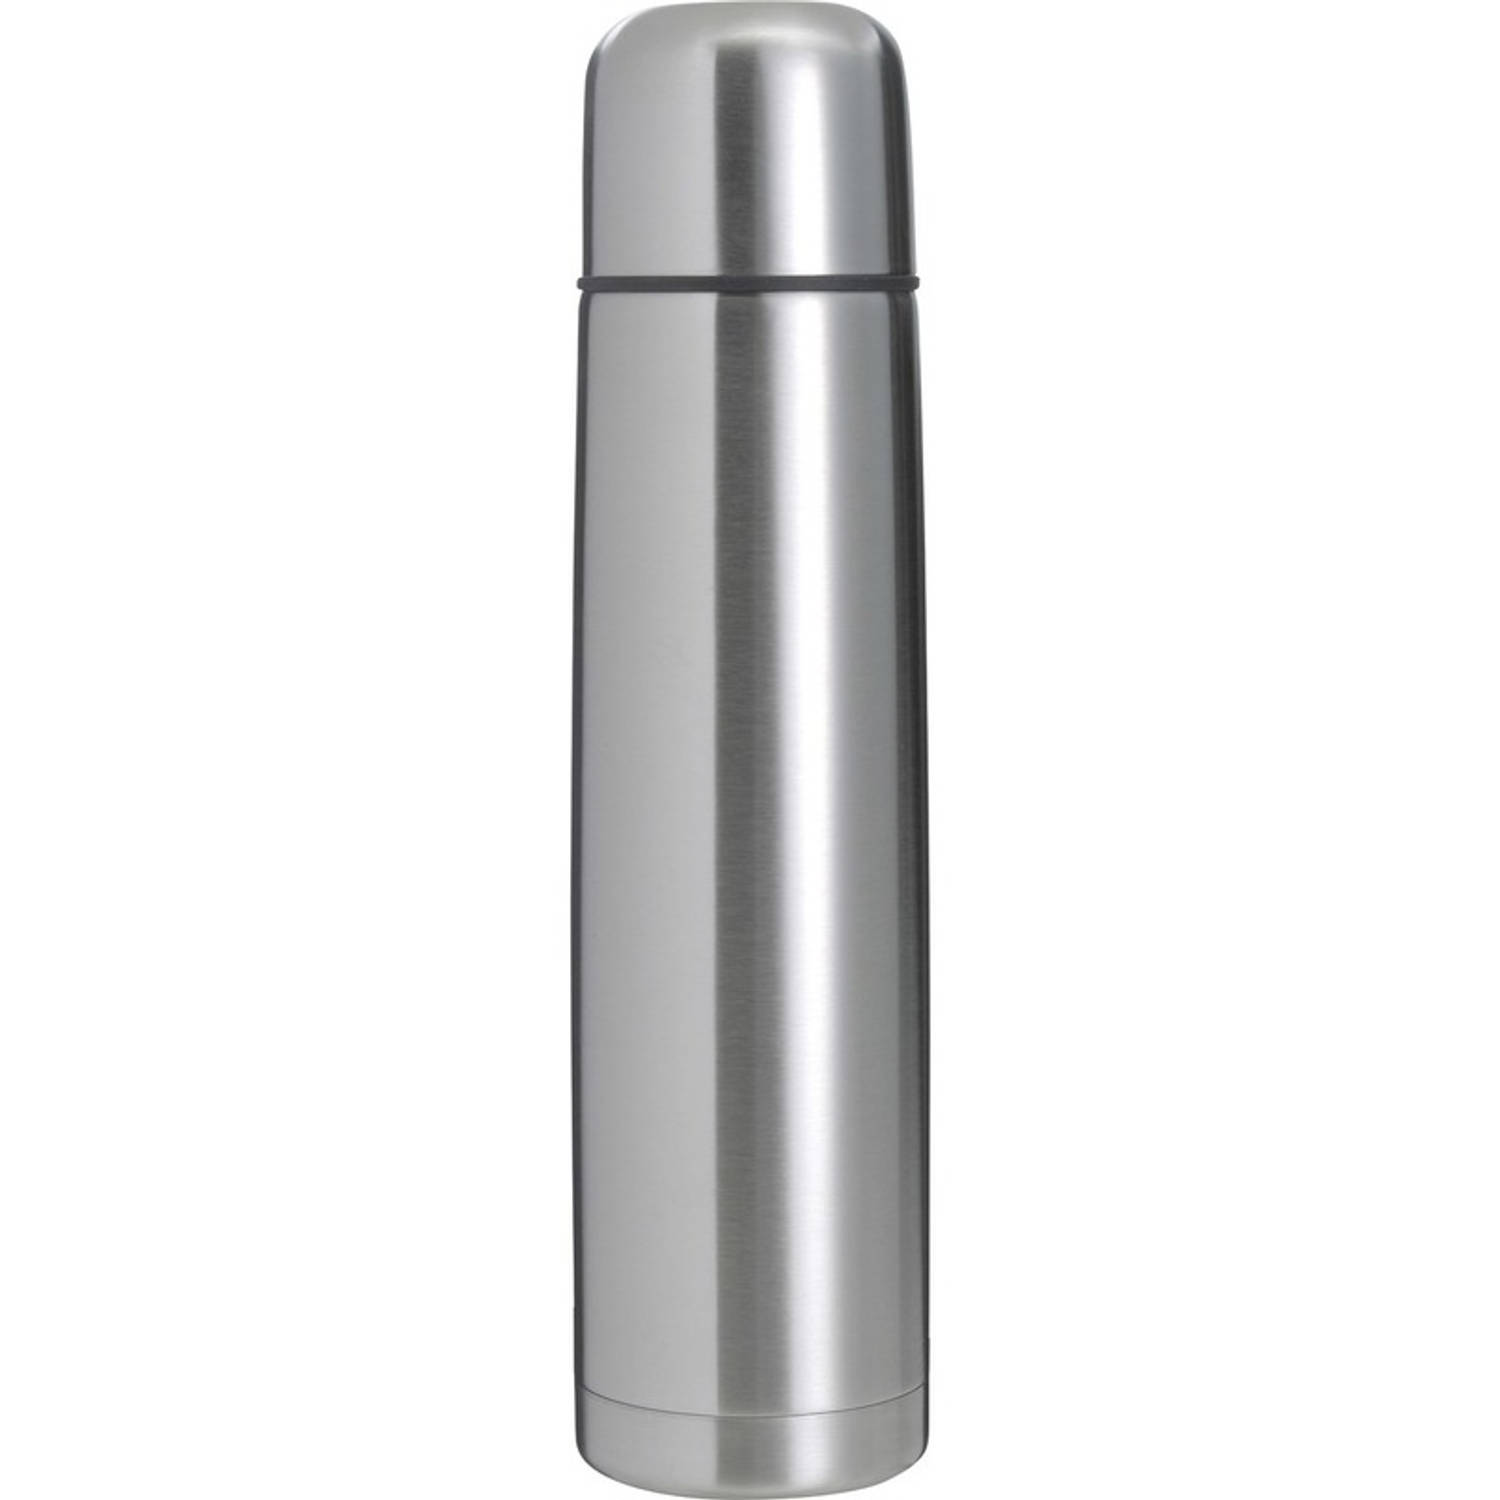 burgemeester Kaal Pool RVS thermosfles/isoleerkan 1 liter zilver - Thermosflessen | Blokker